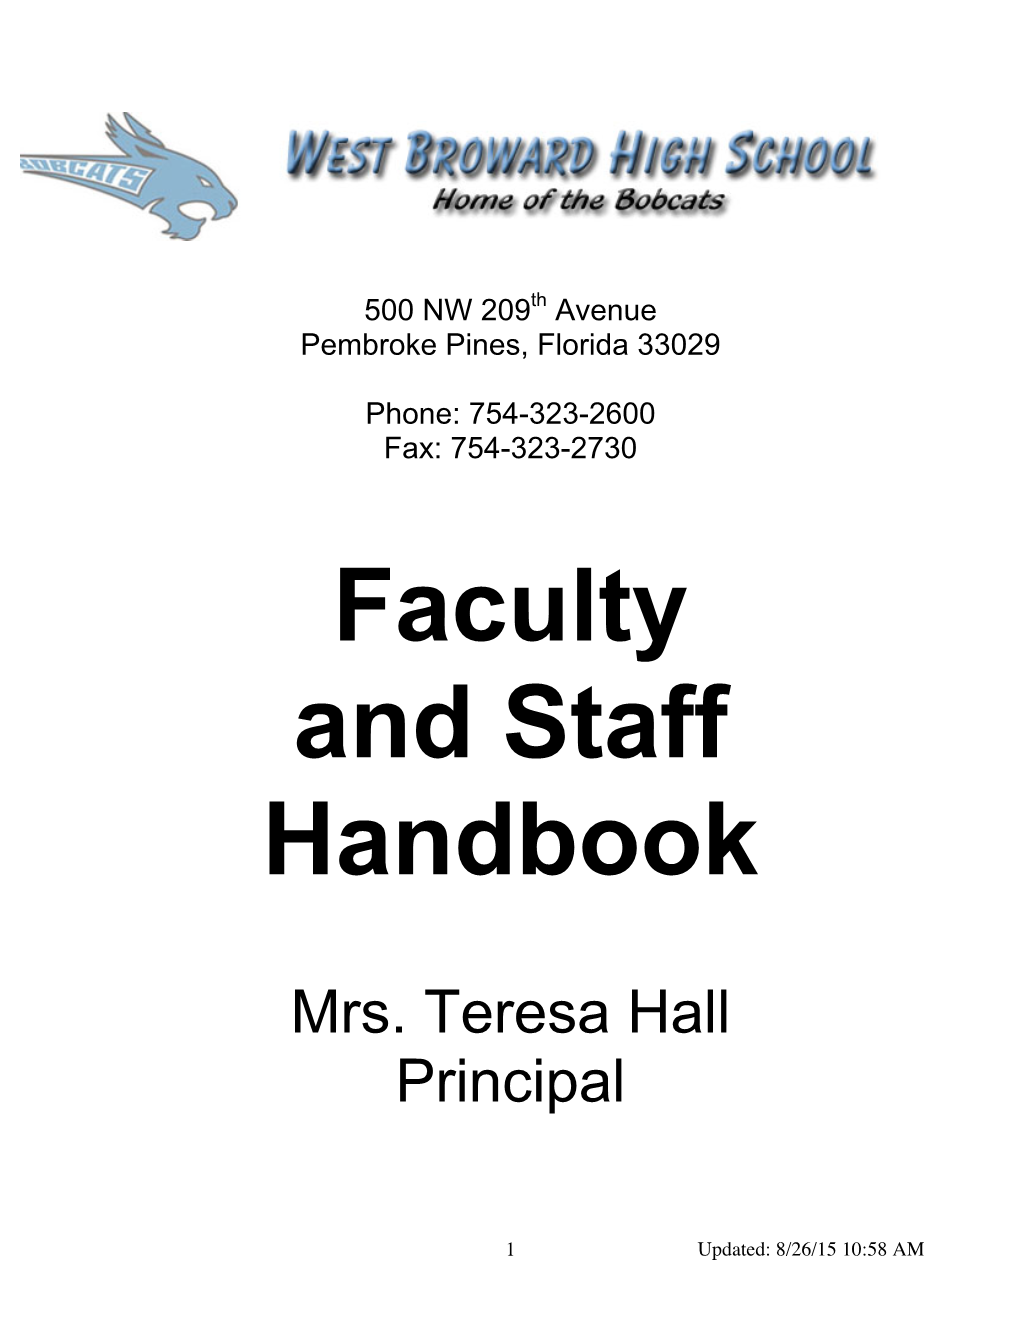 WBH Staff Handbook 2015-16